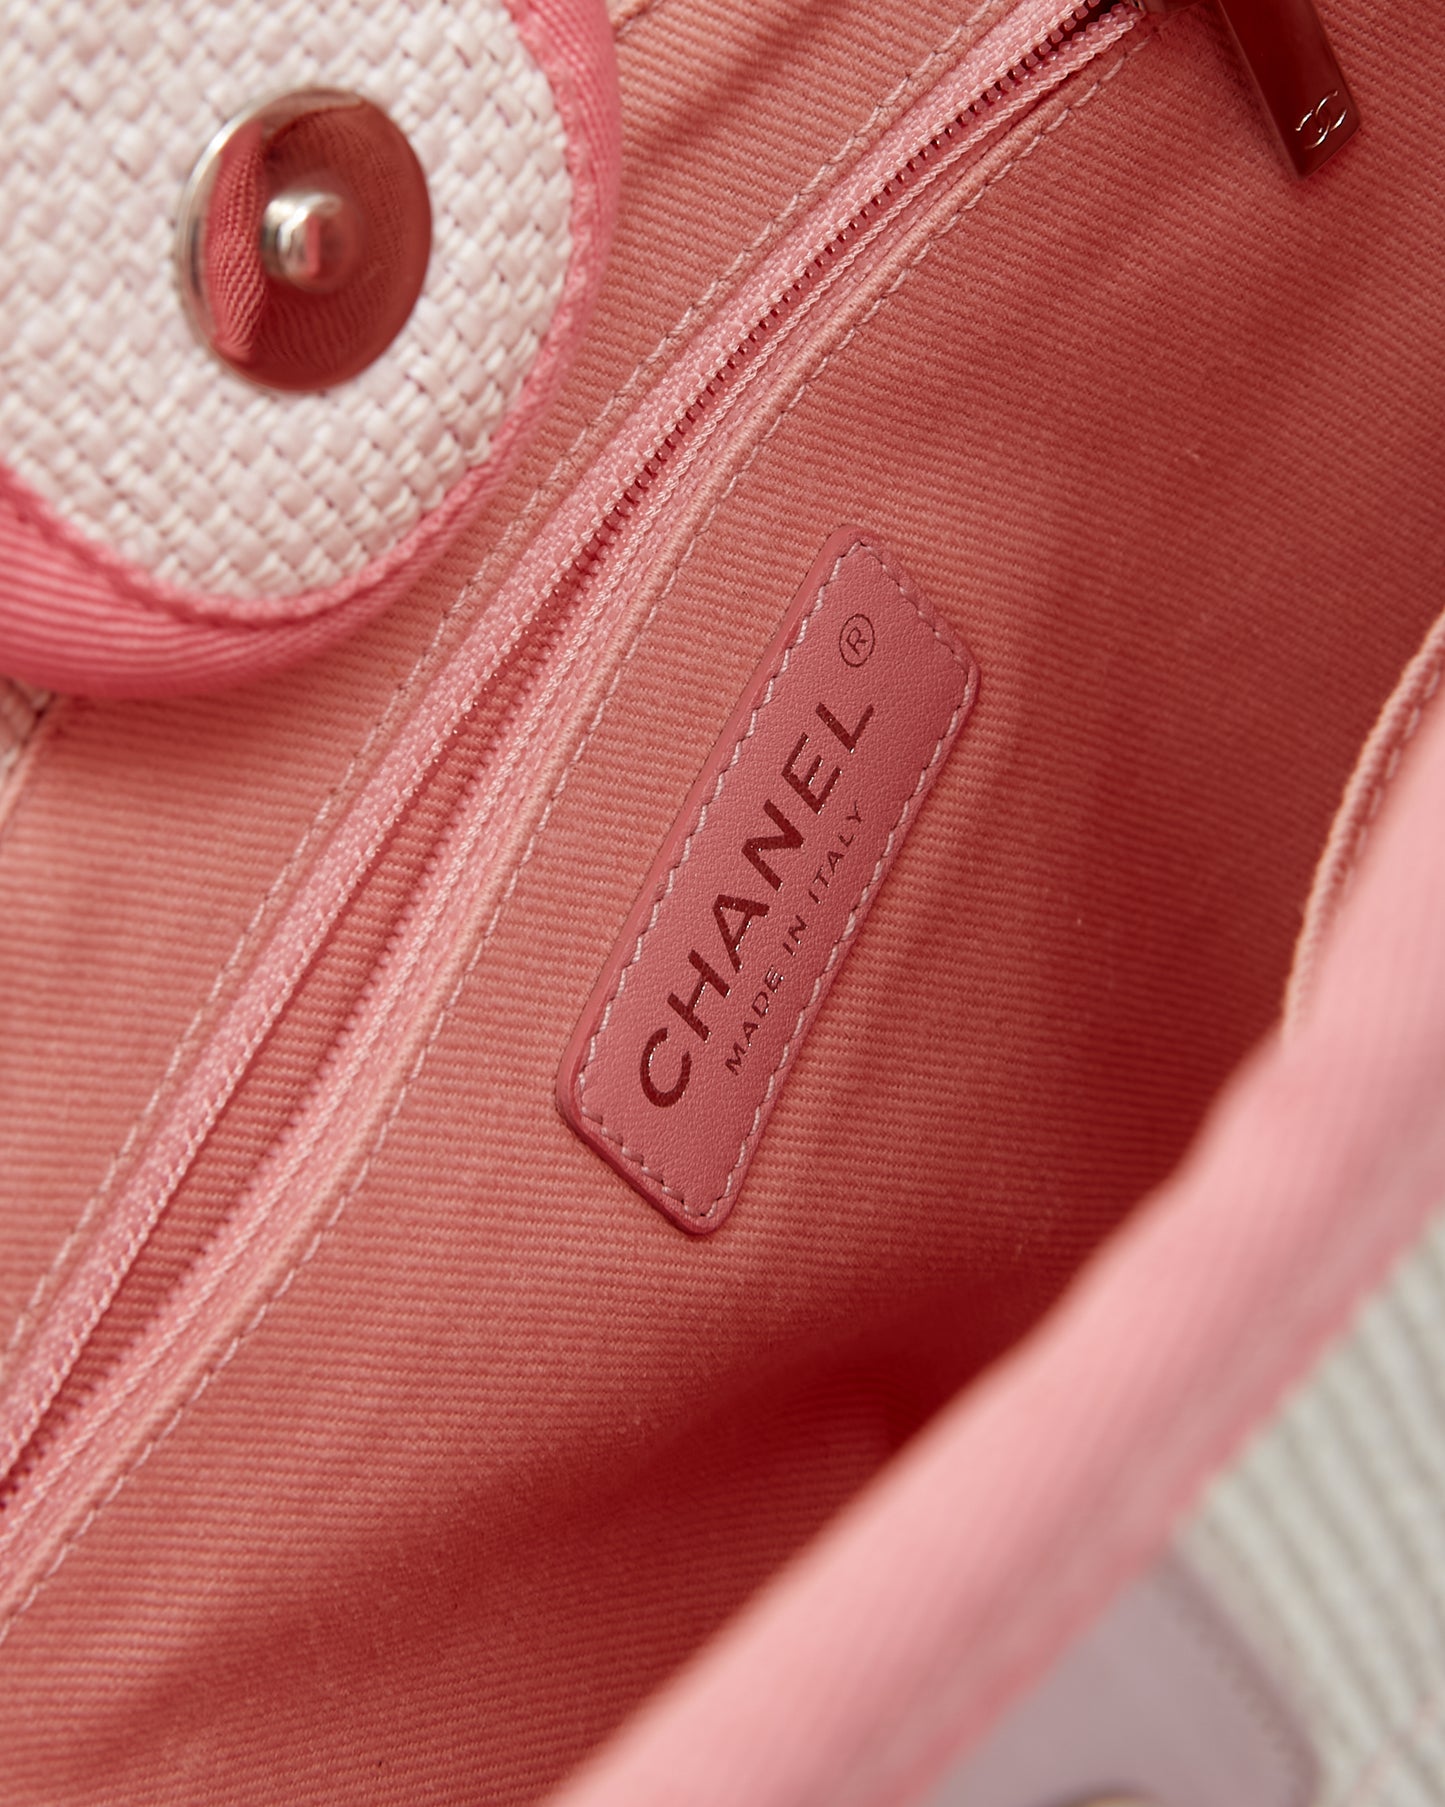 Chanel Cream & Pink Canvas Small Deauville Small Tote Bag